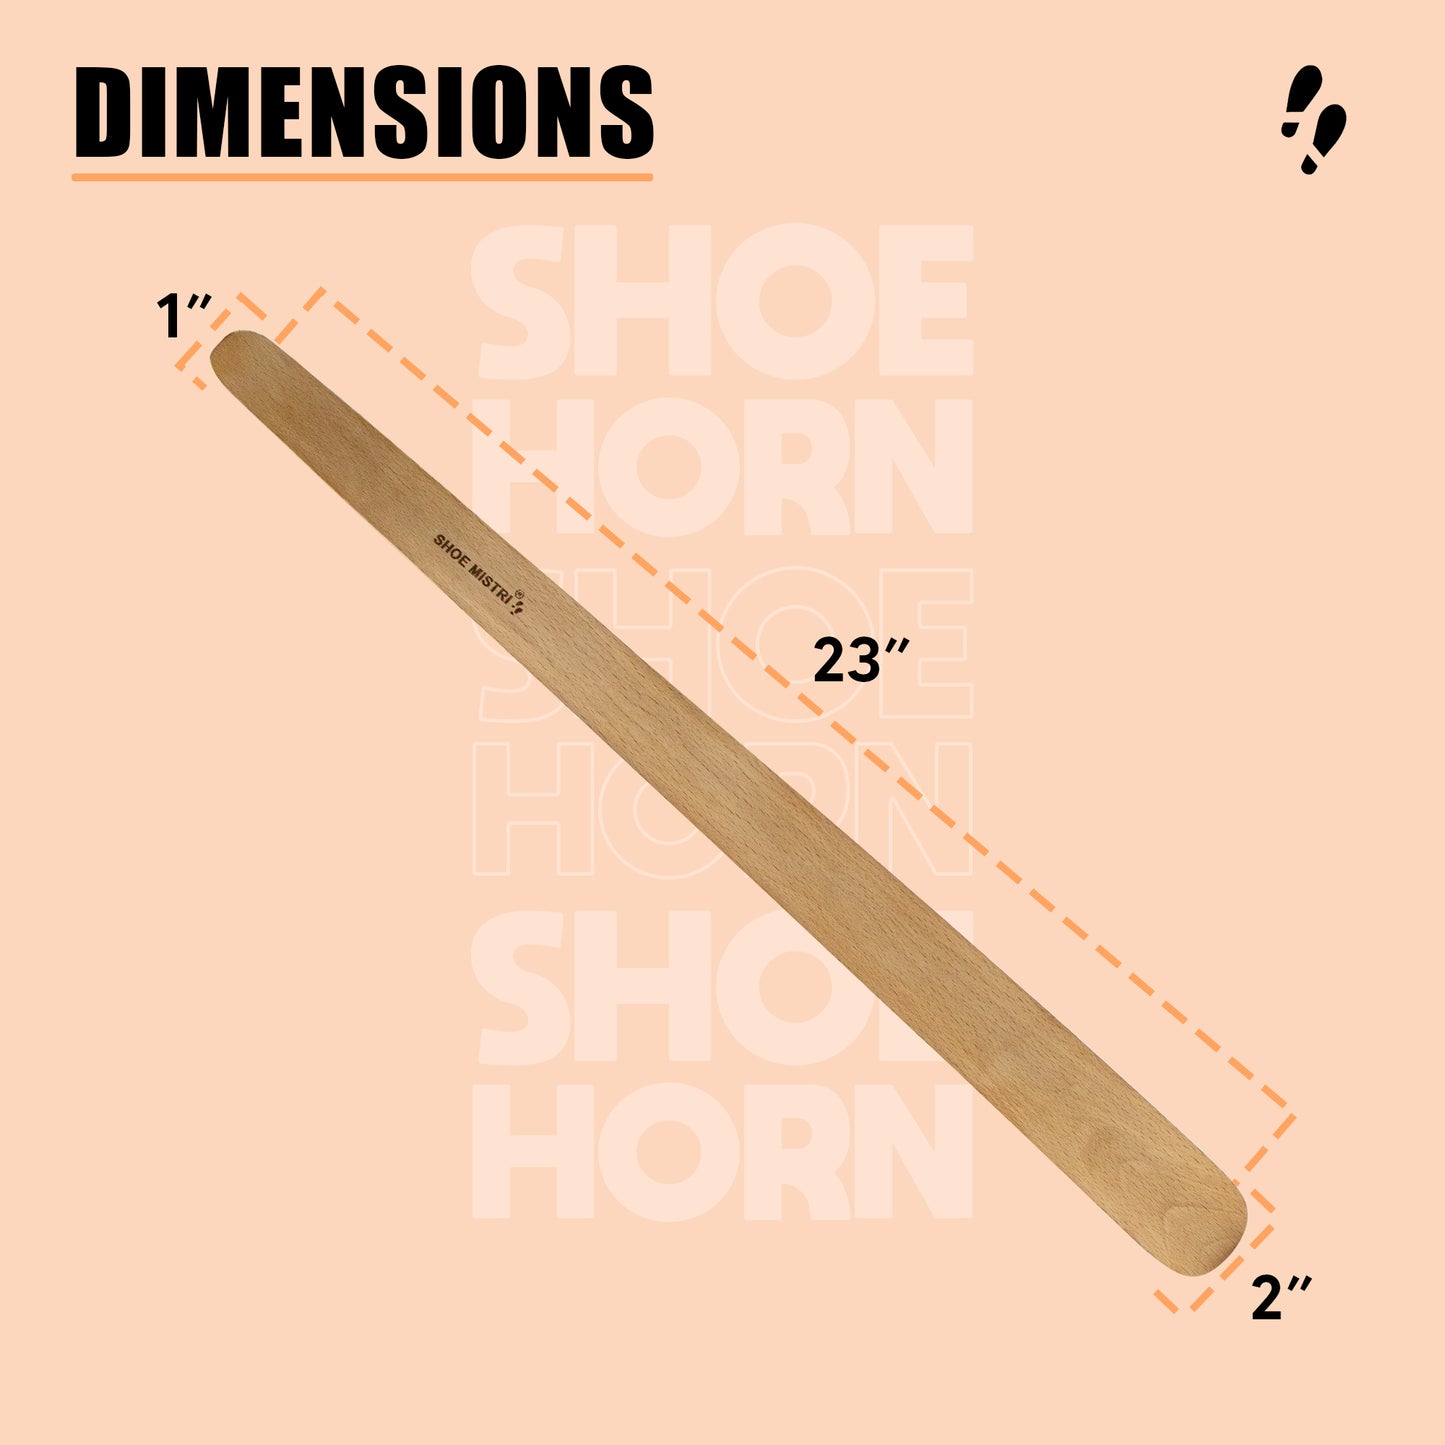 Shoe Mistri Shoe Horn for Men & Women | Lightweight Wooden Material I 23" (for Bag, Drawer, Home, Work, Car, Travelling etc.)